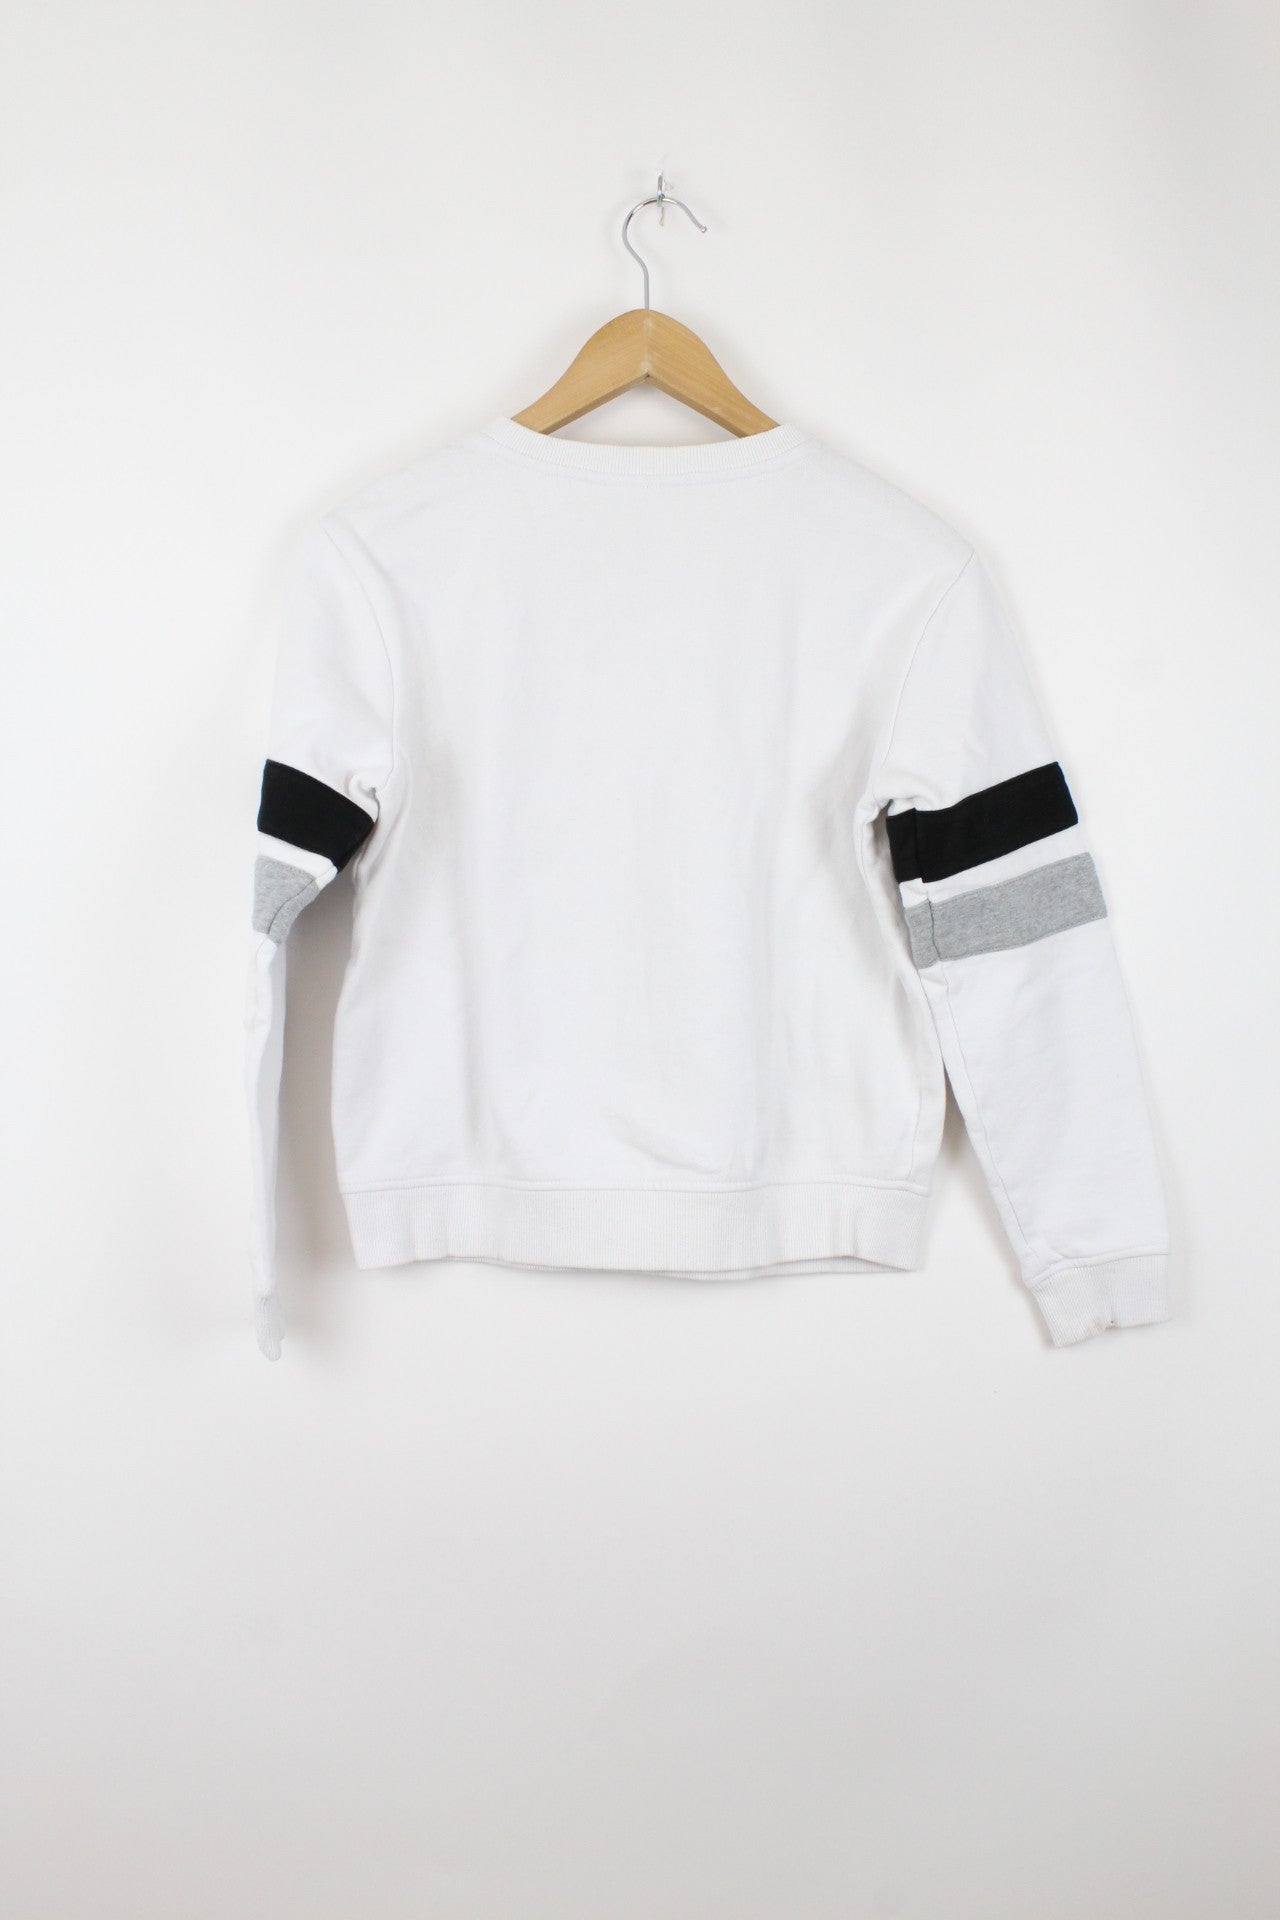 Vintage Fila Sweater - XS